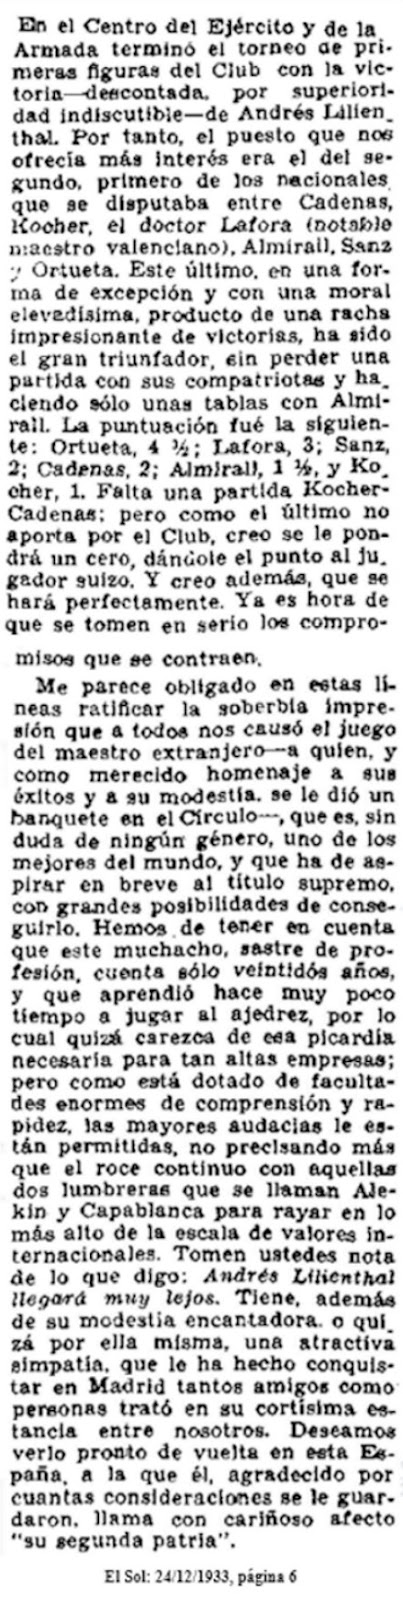 Torneo Internacional de Ajedrez de Madrid 1933, recorte de prensa